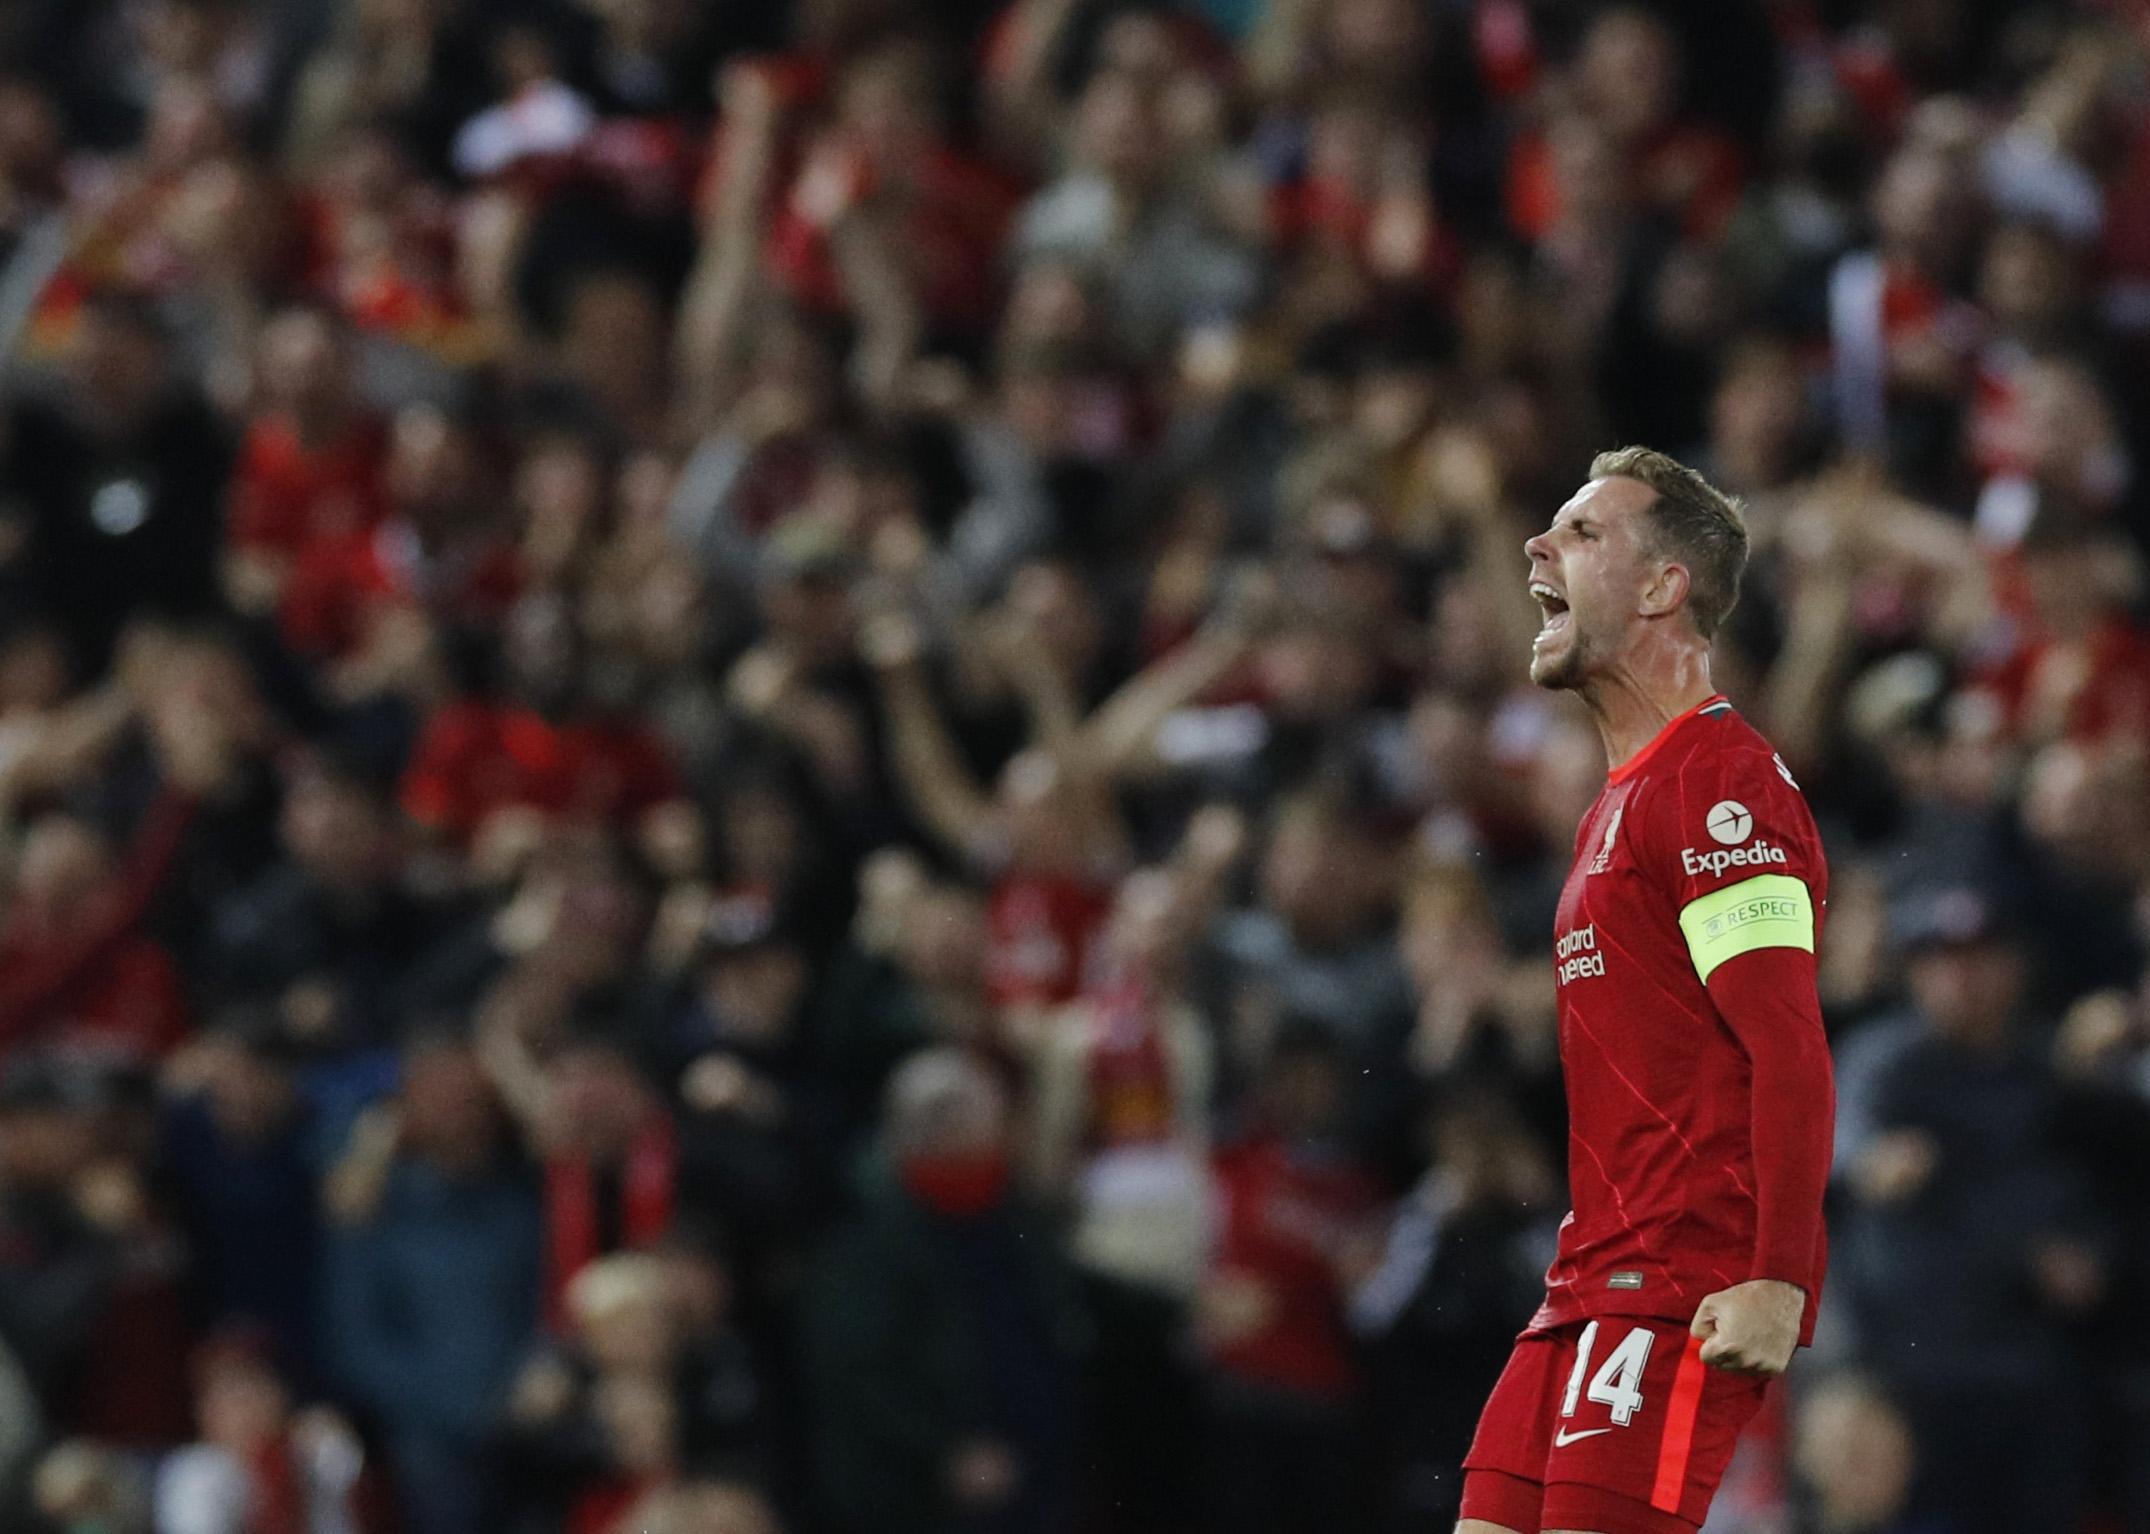 Henderson fires winner as Liverpool beat Milan in thriller